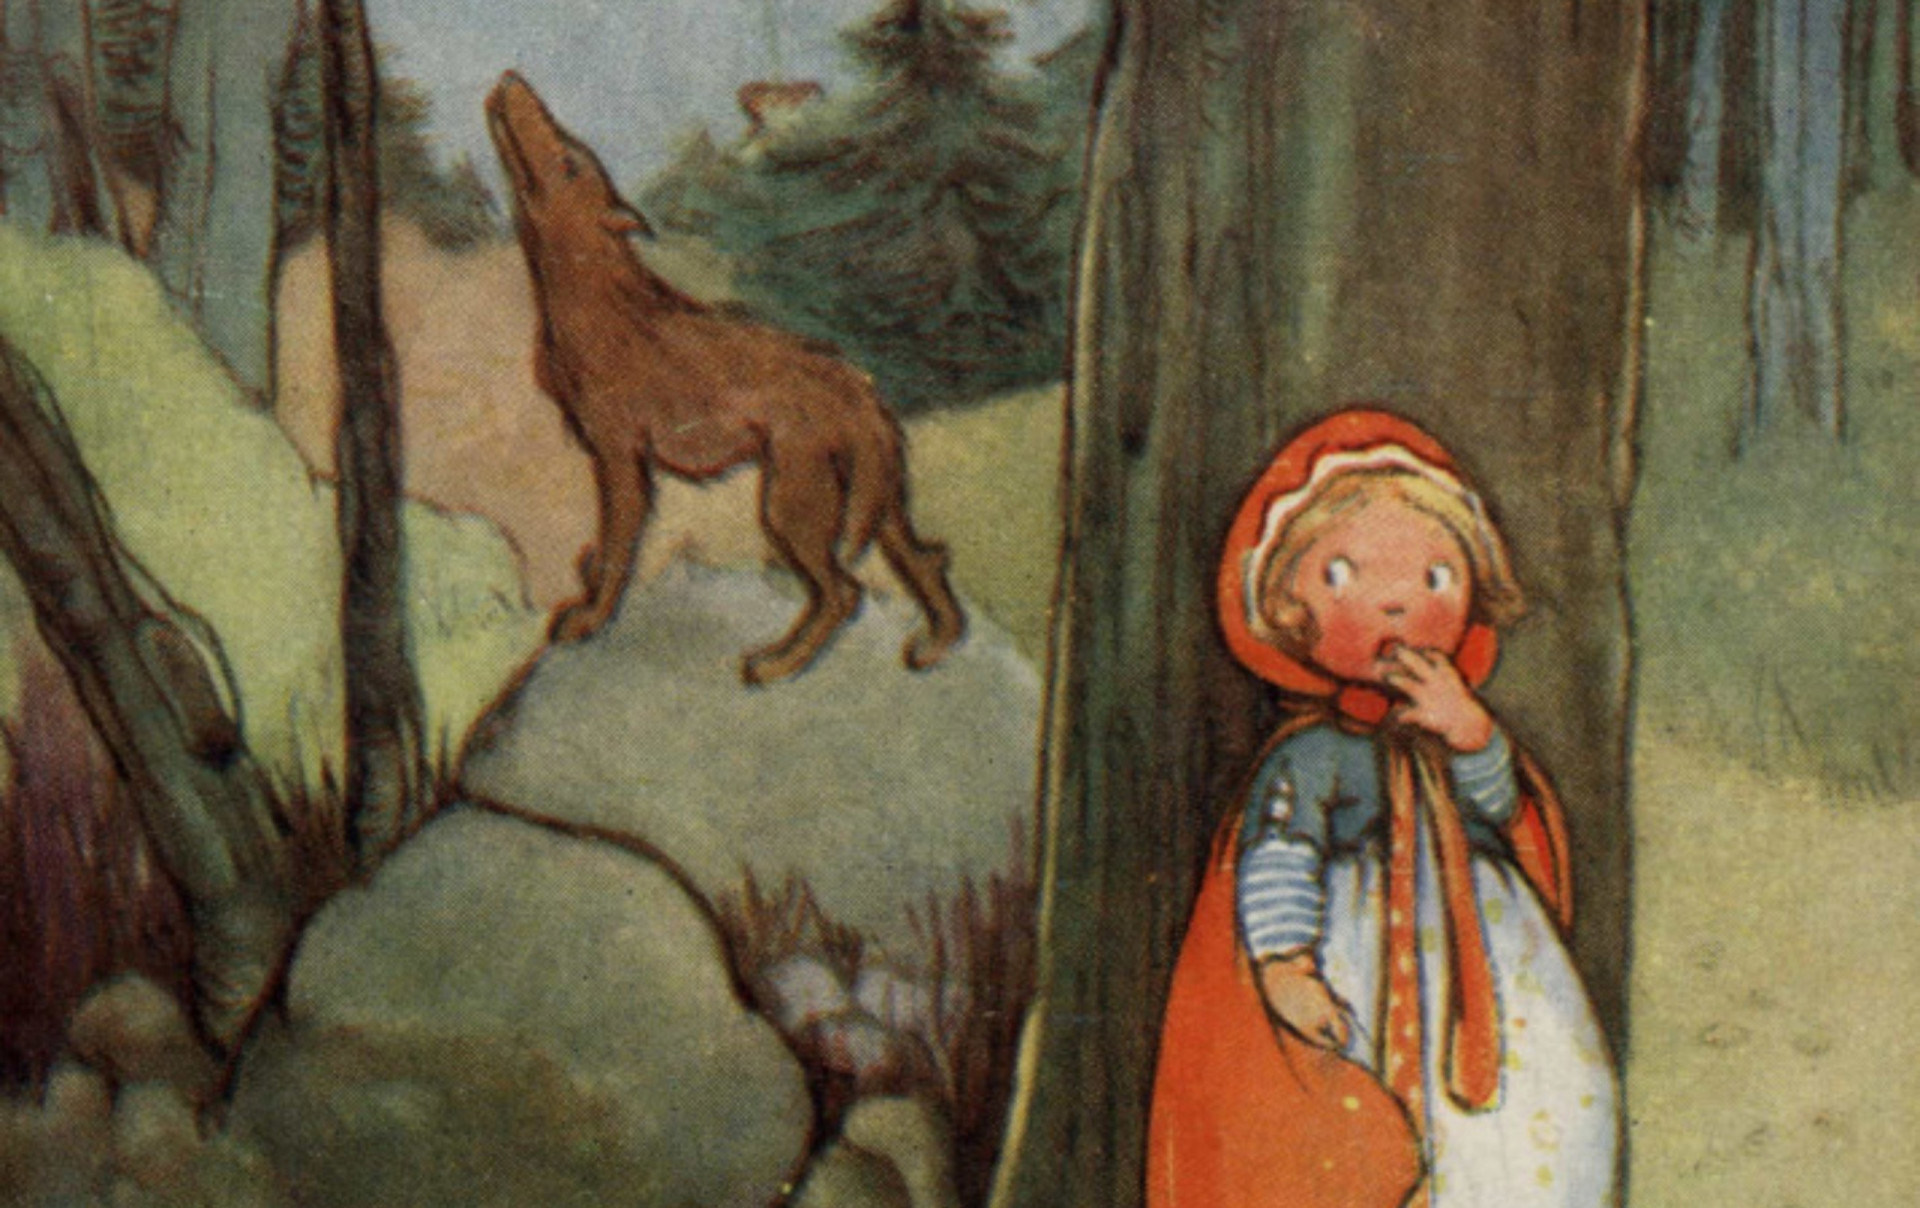 The dark and creepy origins of classic fairy tales